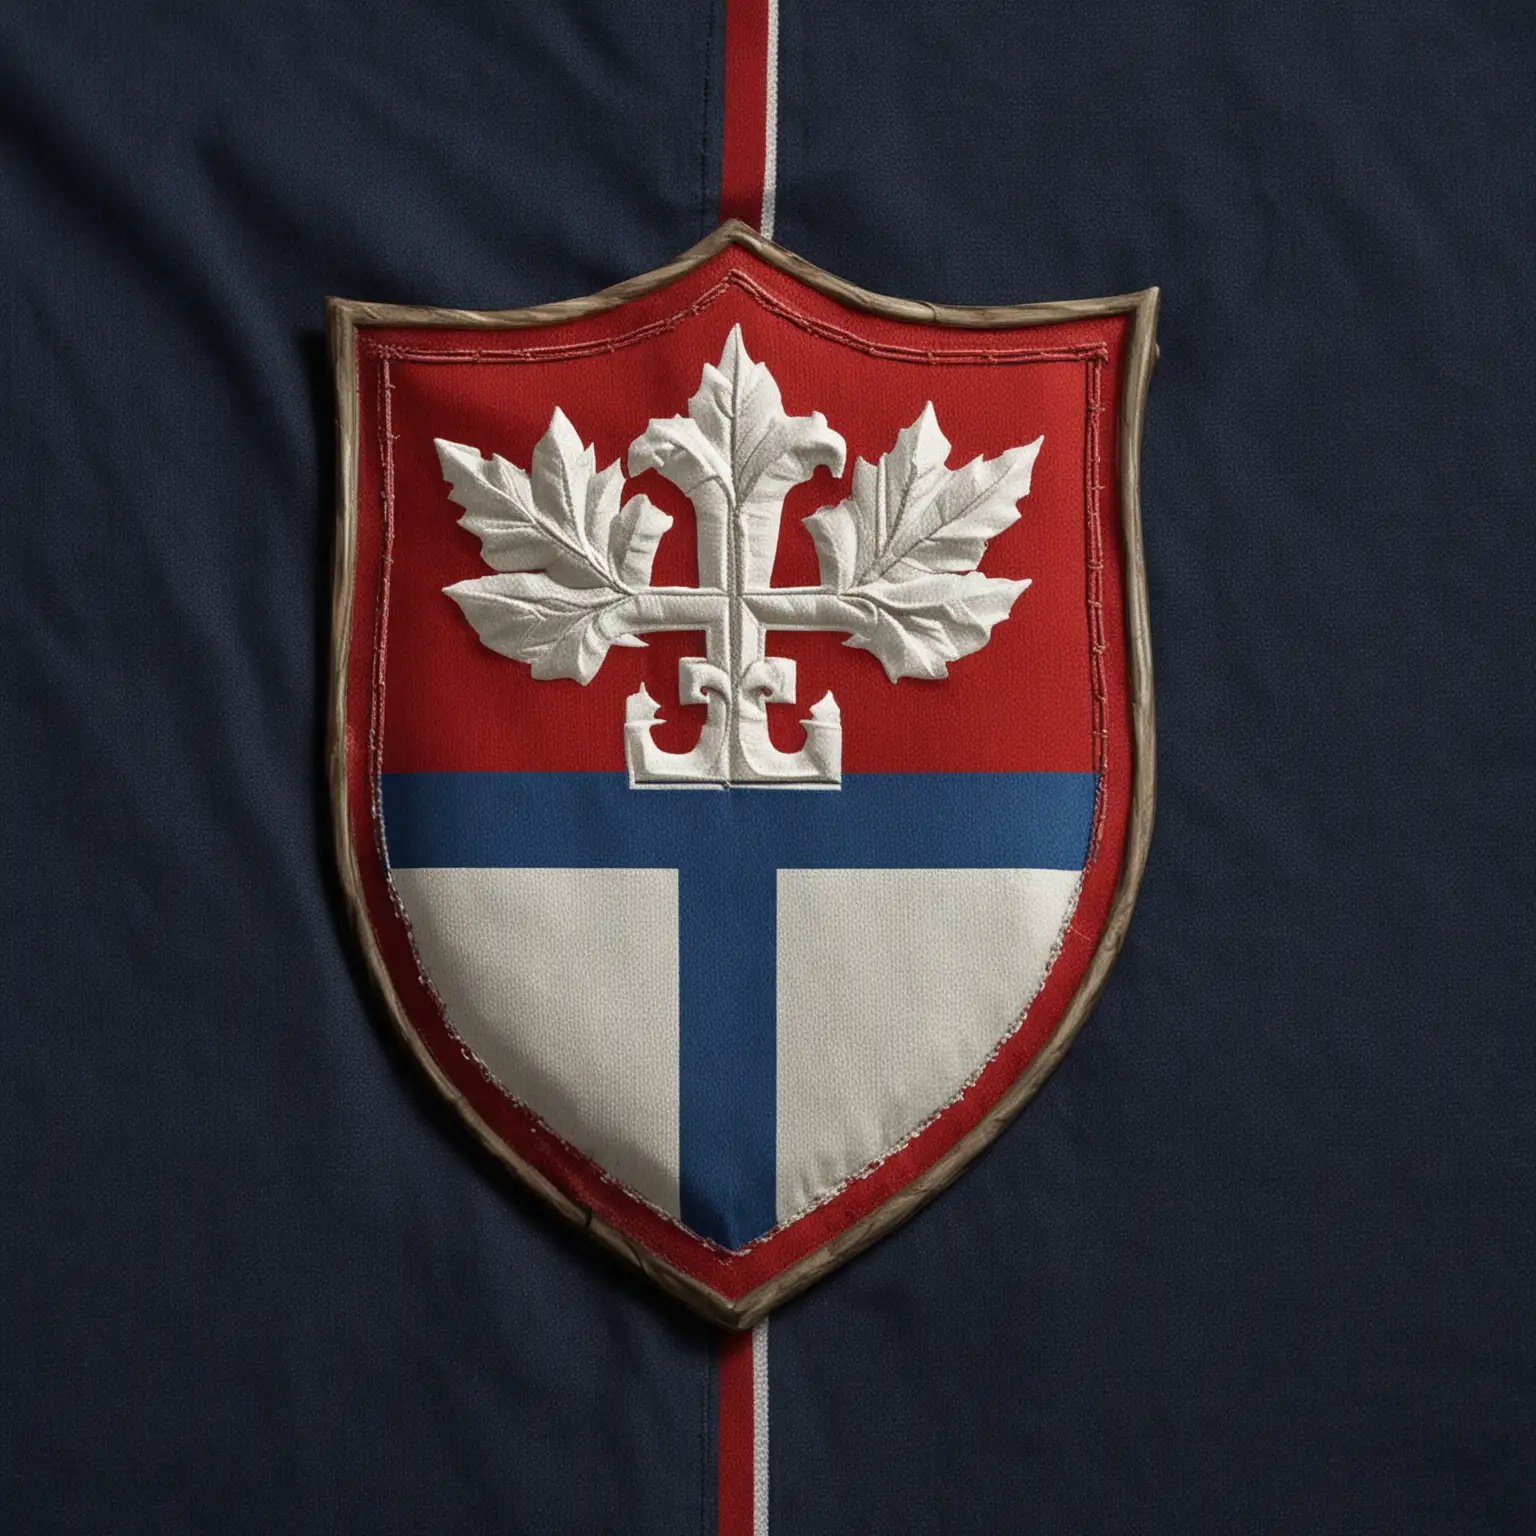 Slovakia Sports Jersey with Emblem Patriarchal Cross on Dark Blue Fabric